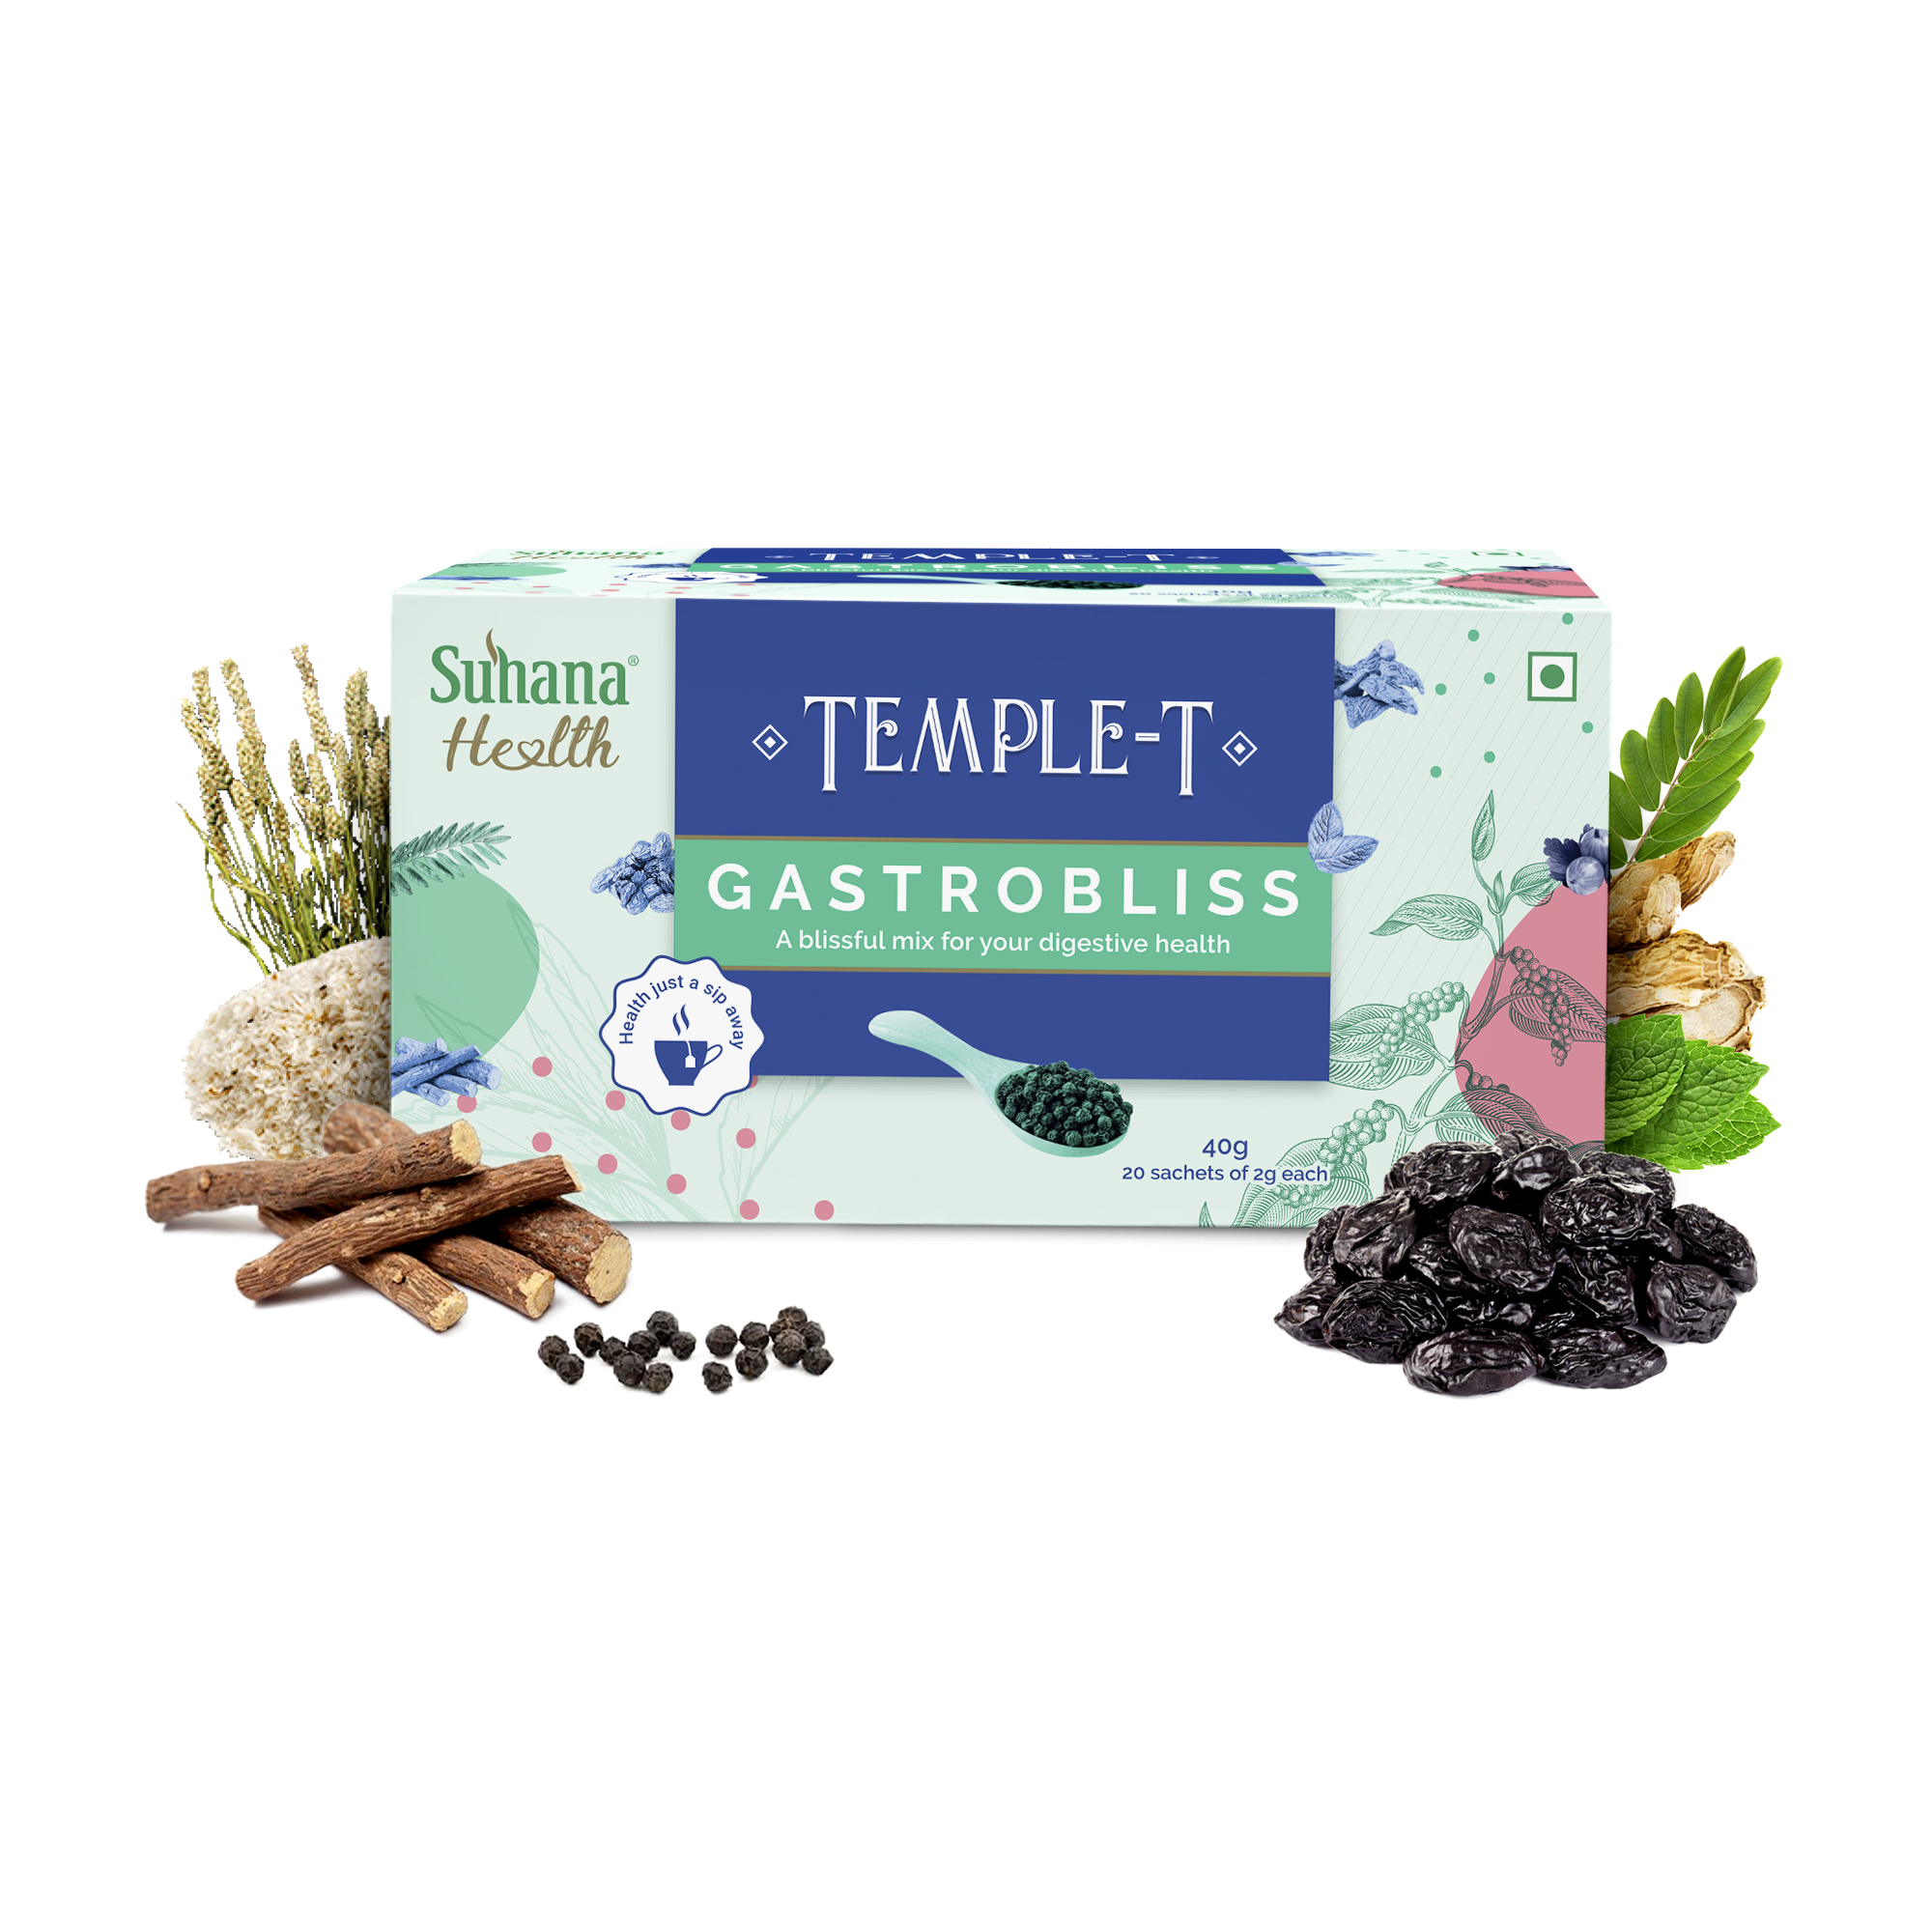 Suhana Health Gastrobliss Herbal Premix Temple T